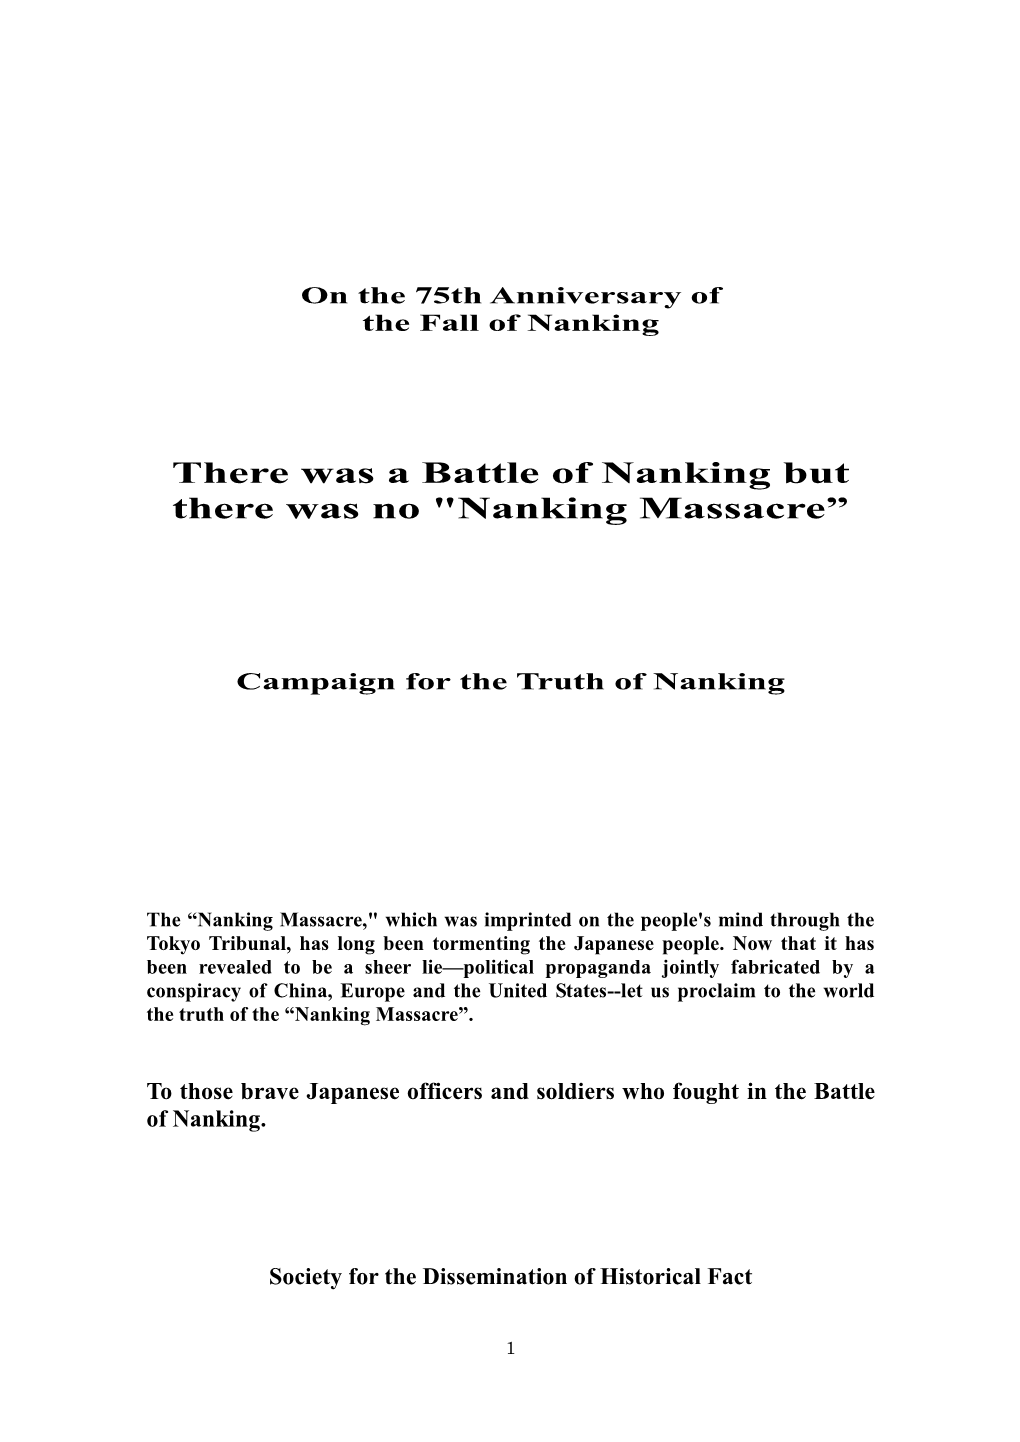 Nanking Massacre”